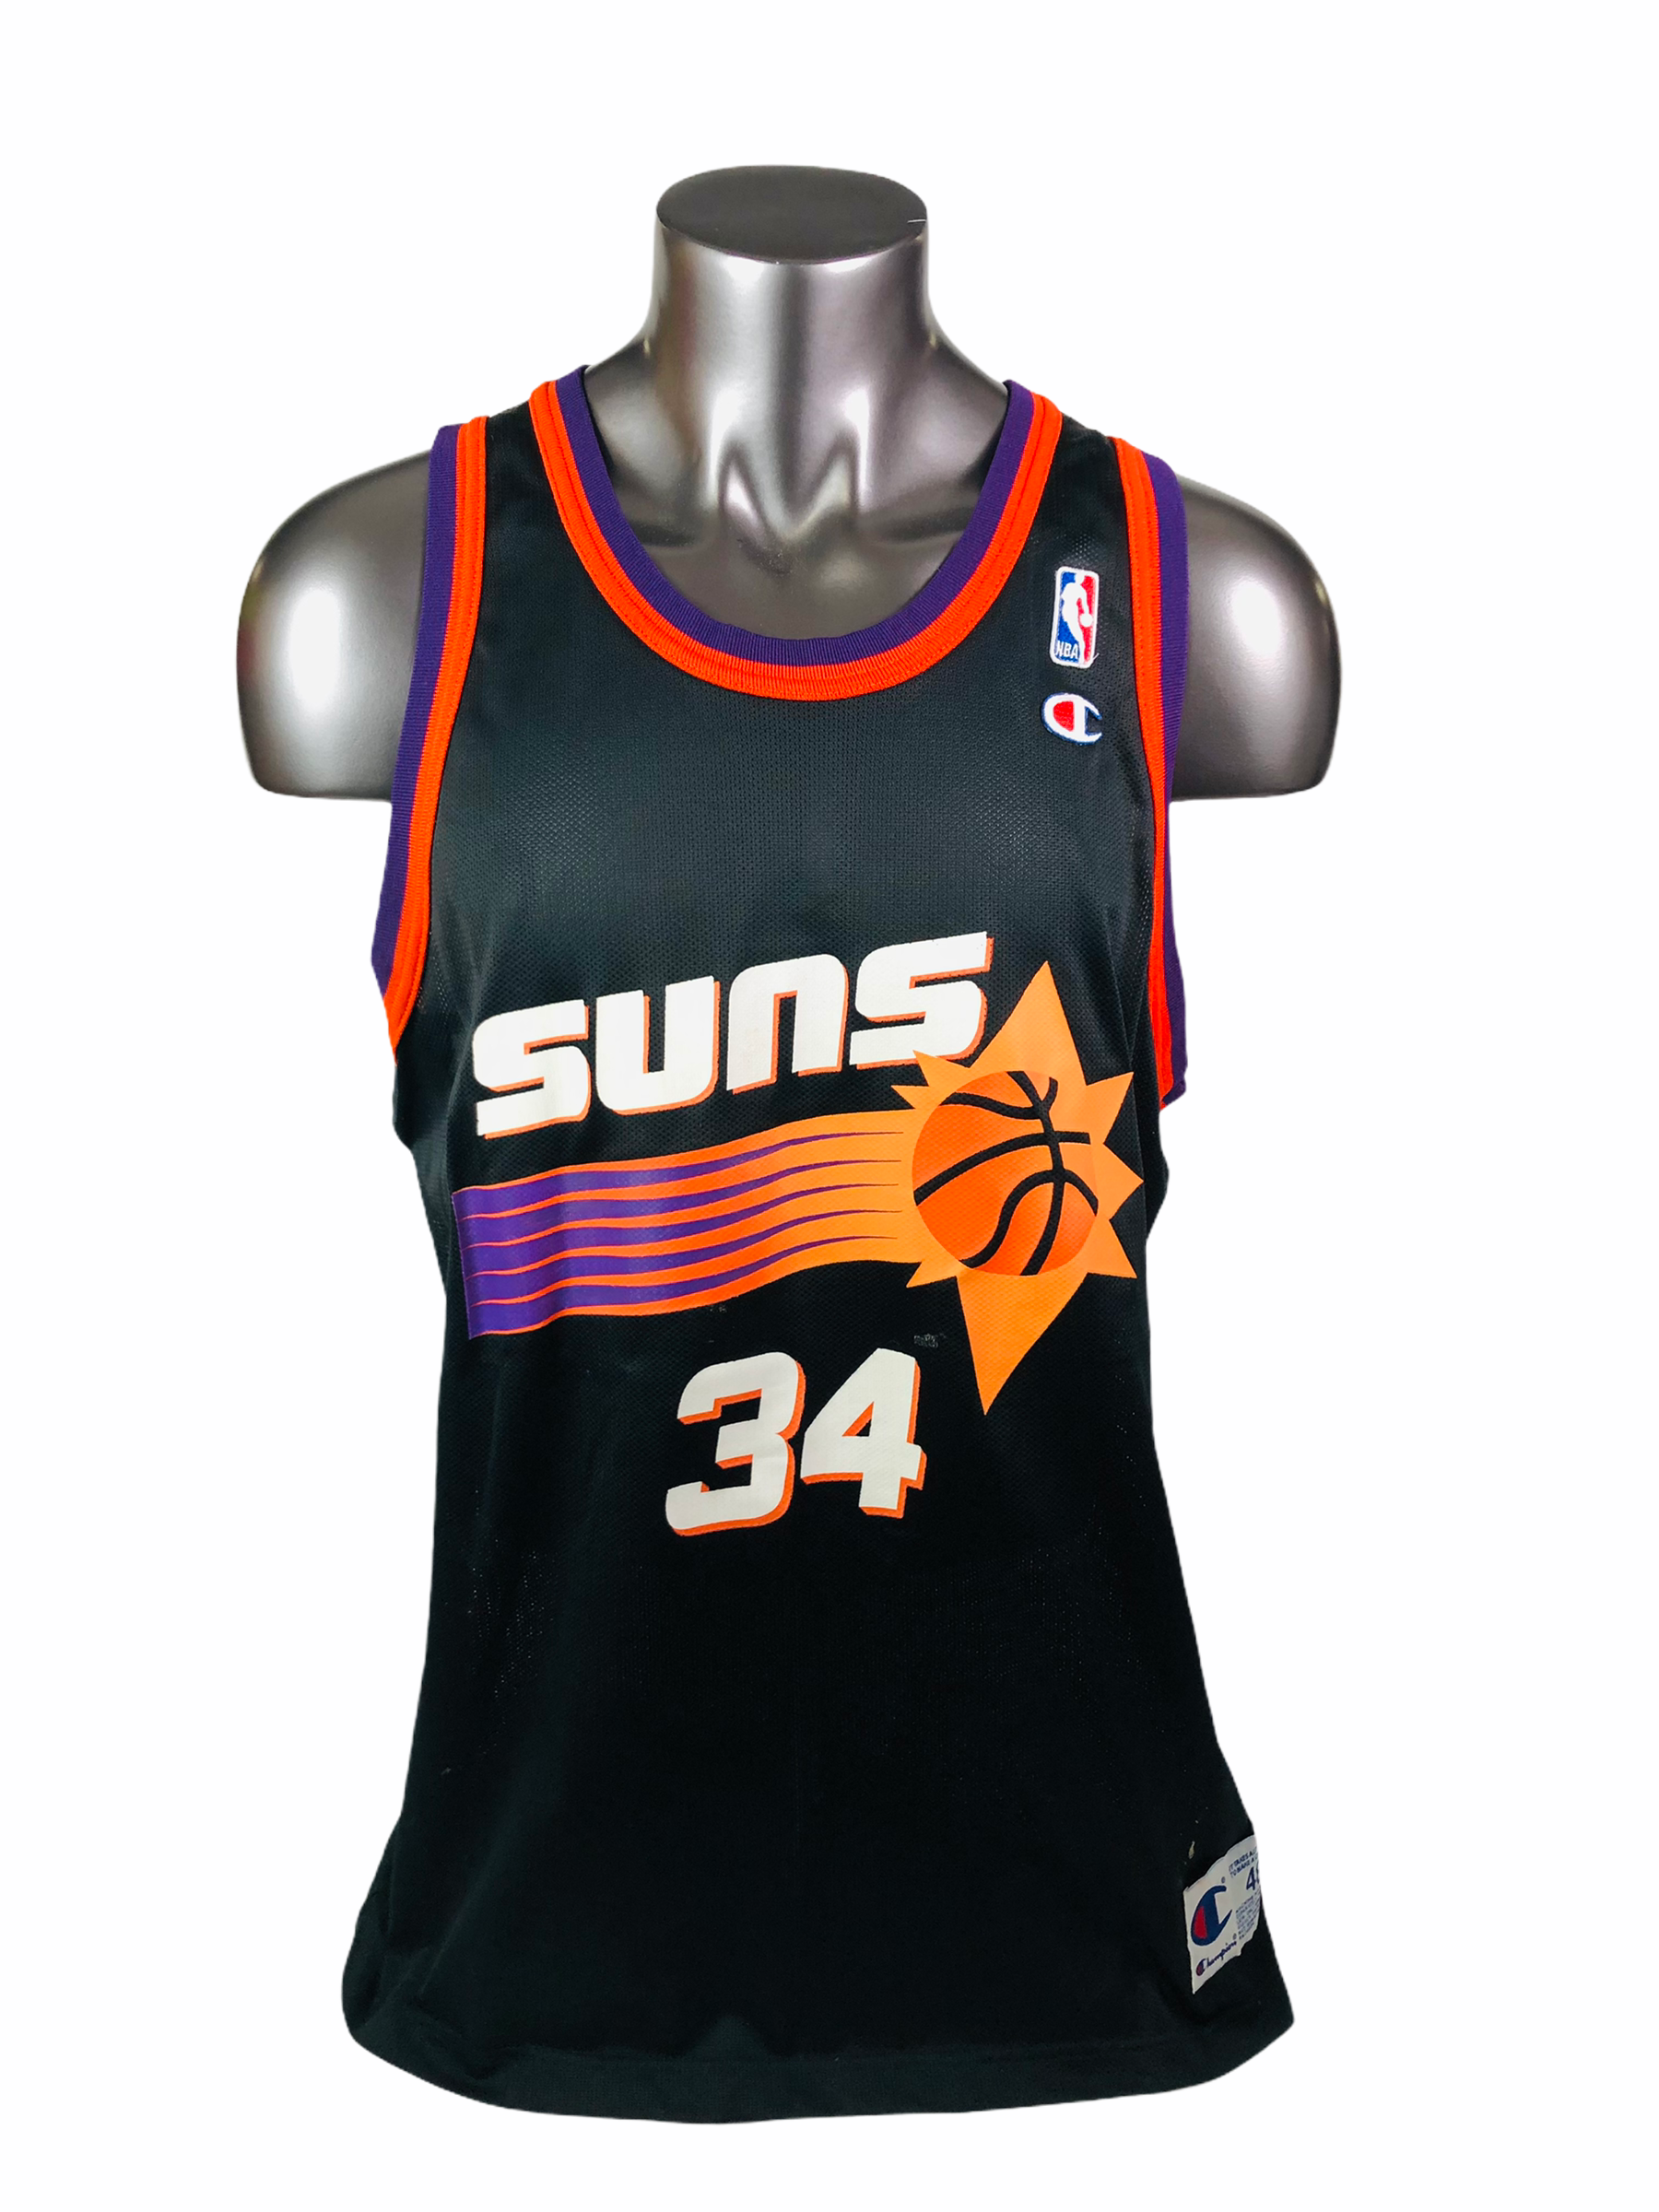 Vintage Charles Barkley basketball jersey. Phoenix suns